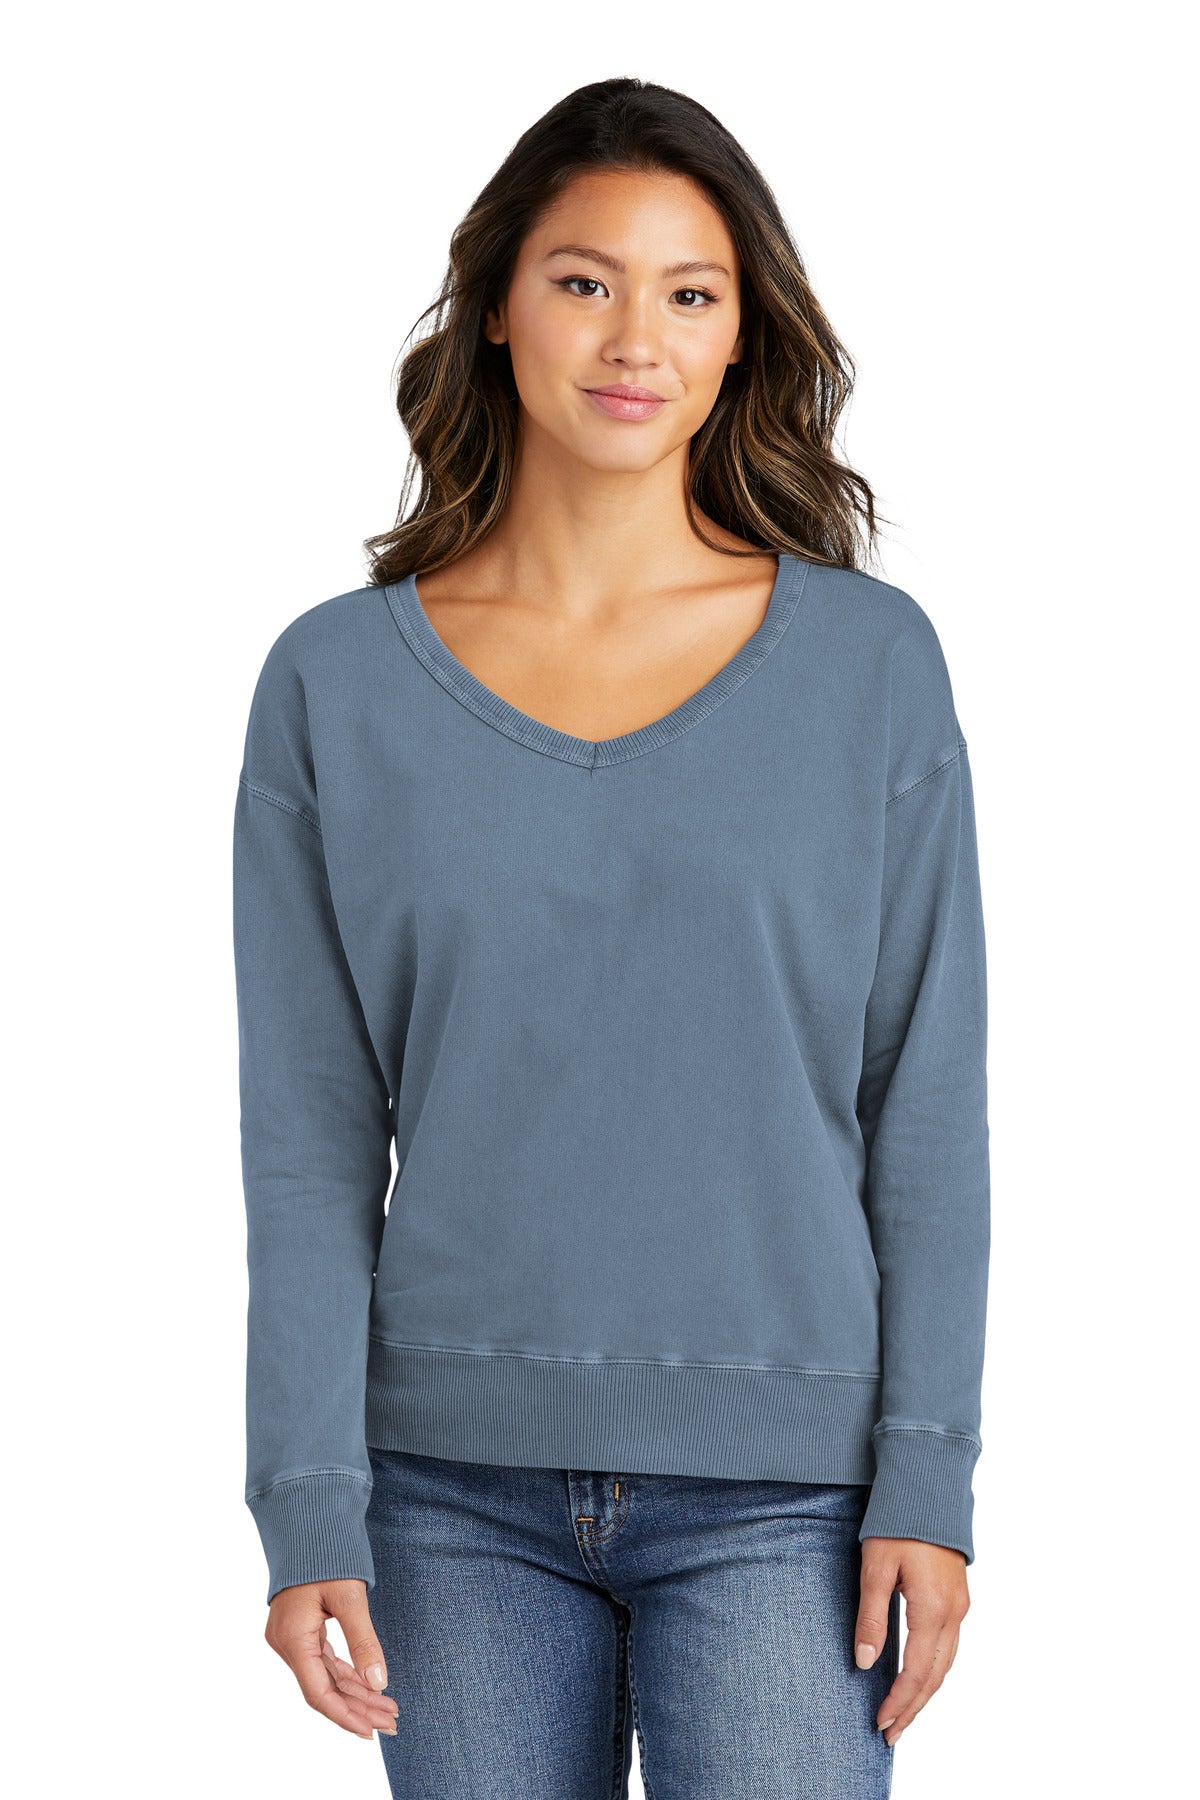 Port & Company® Ladies Beach Wash® Garment-Dyed V-Neck Sweatshirt LPC098V